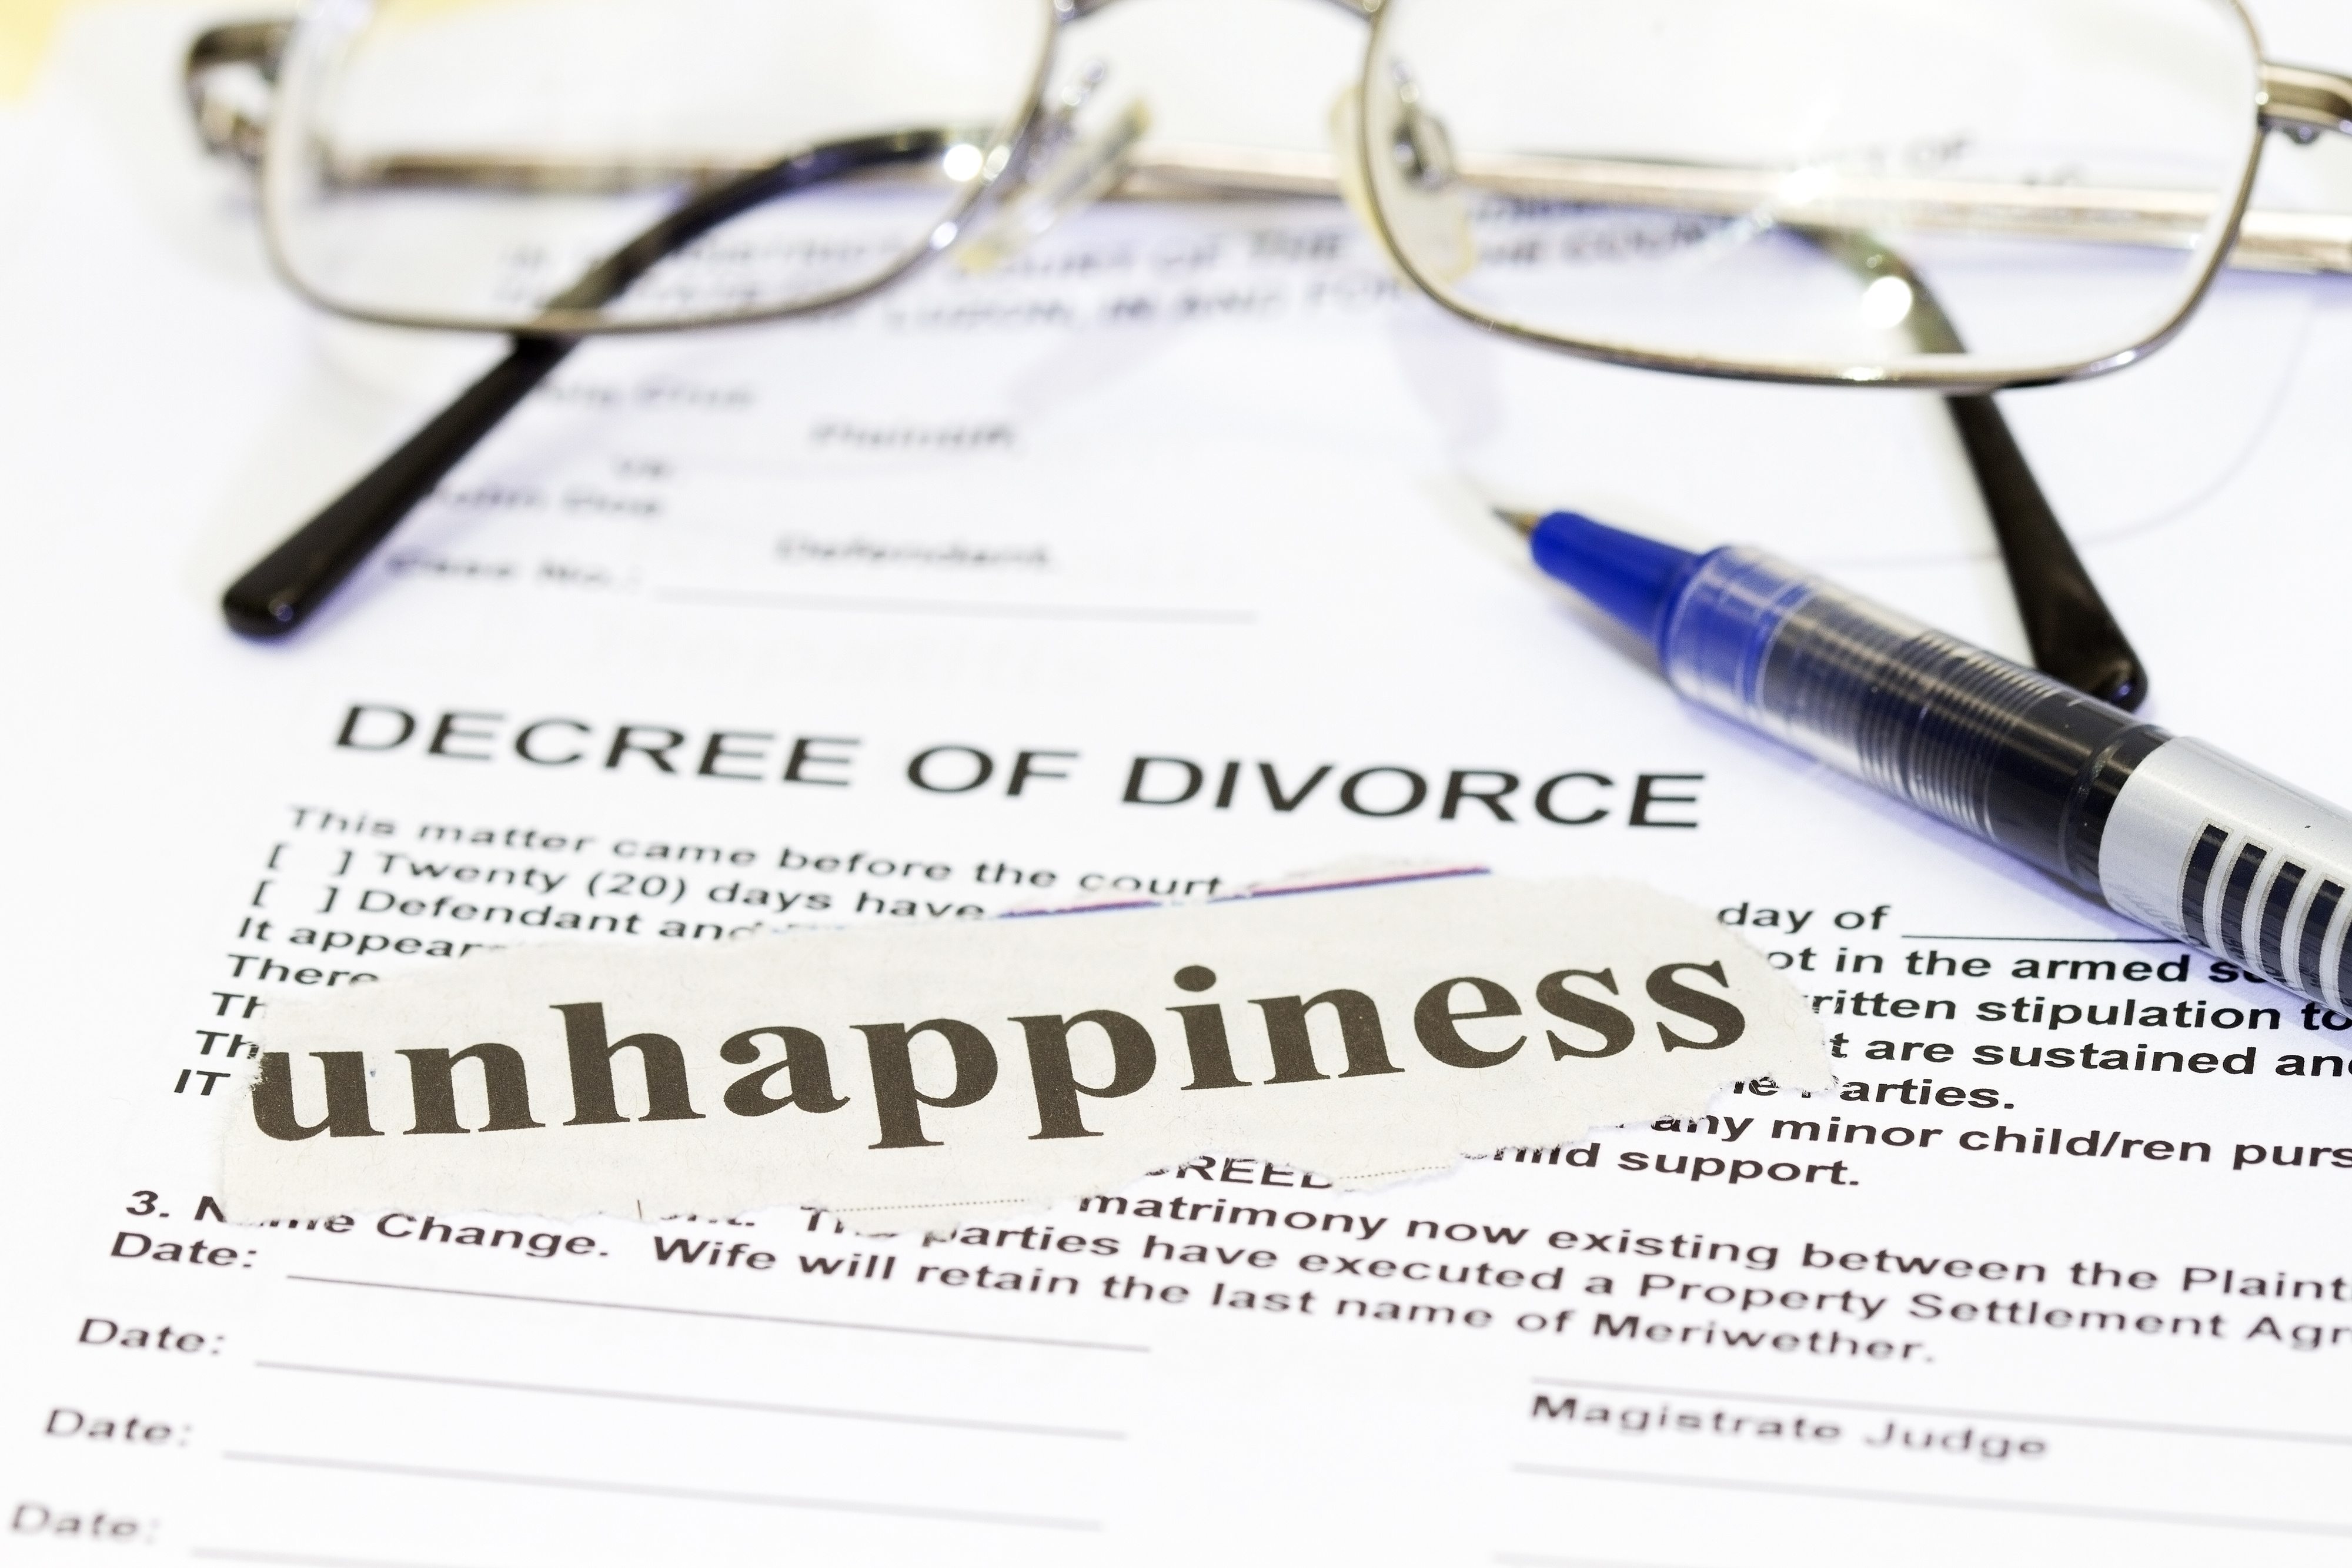 Divorce decree Envelope. I failed to divorce